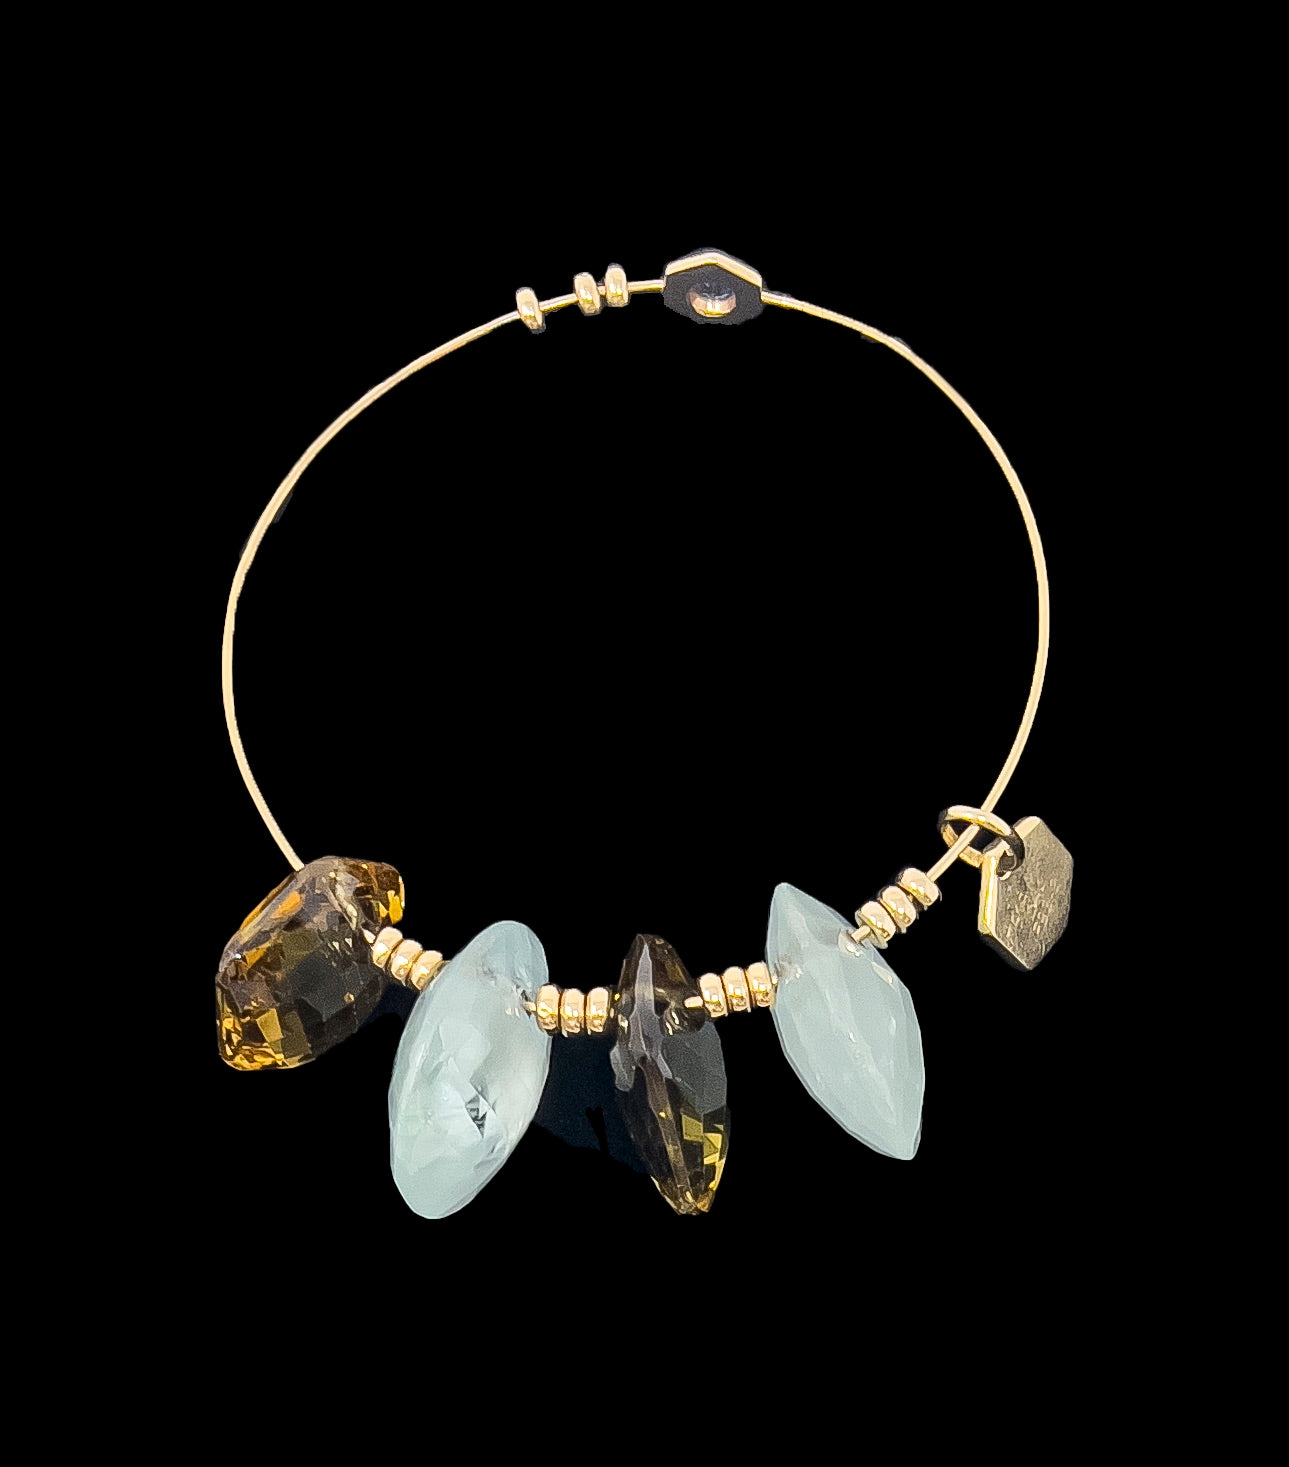 Solid 18k Gold Fairy Bracelet with Hand cut Aquamarine and Cognac Topaz Stones